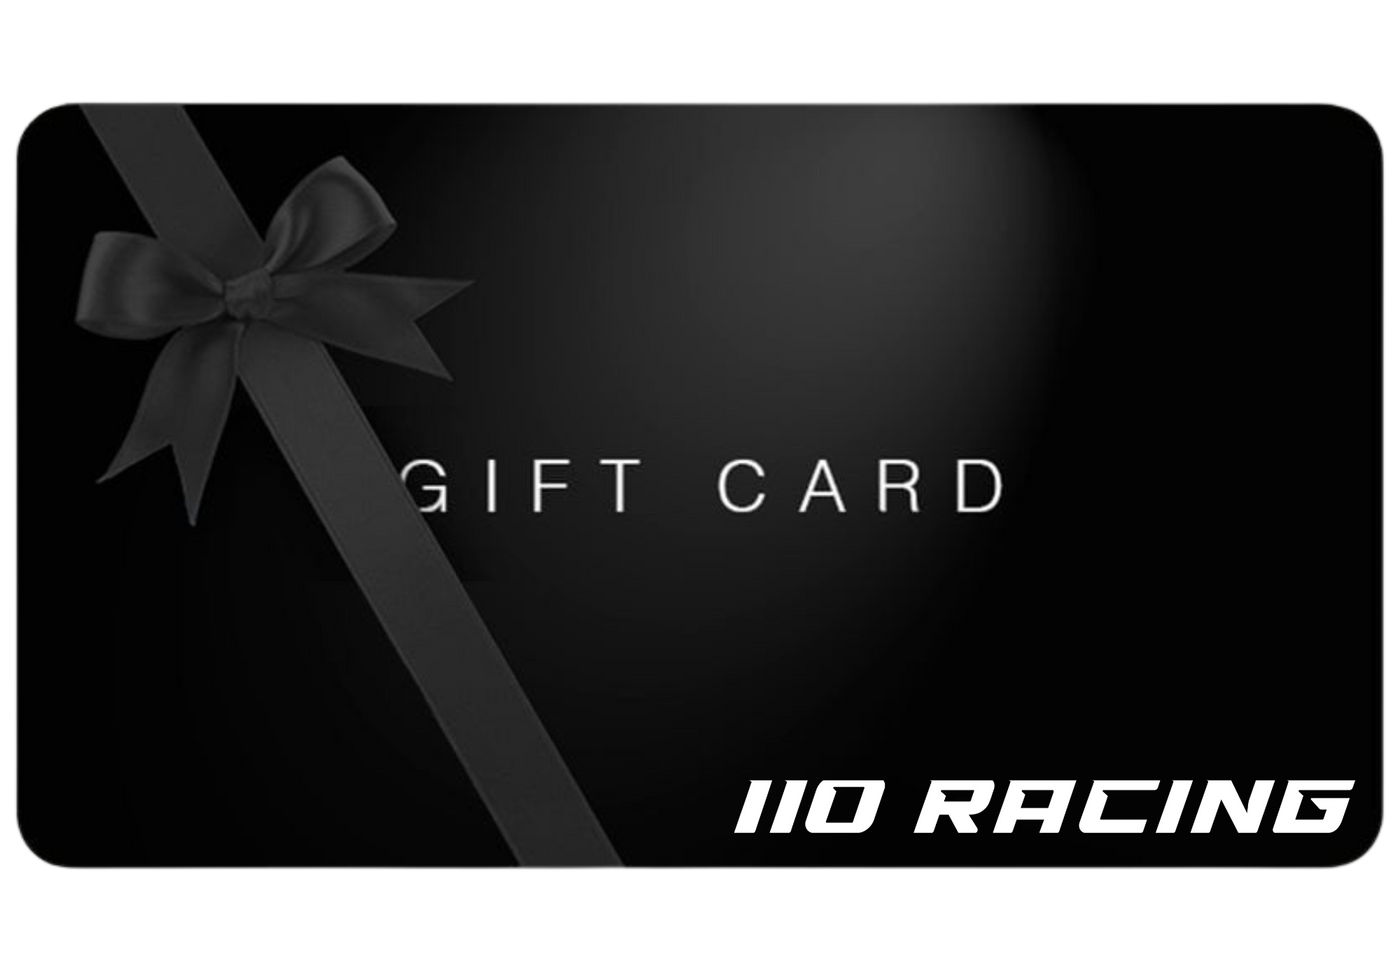 » 110 RACING x GIFT CARD (100% off)